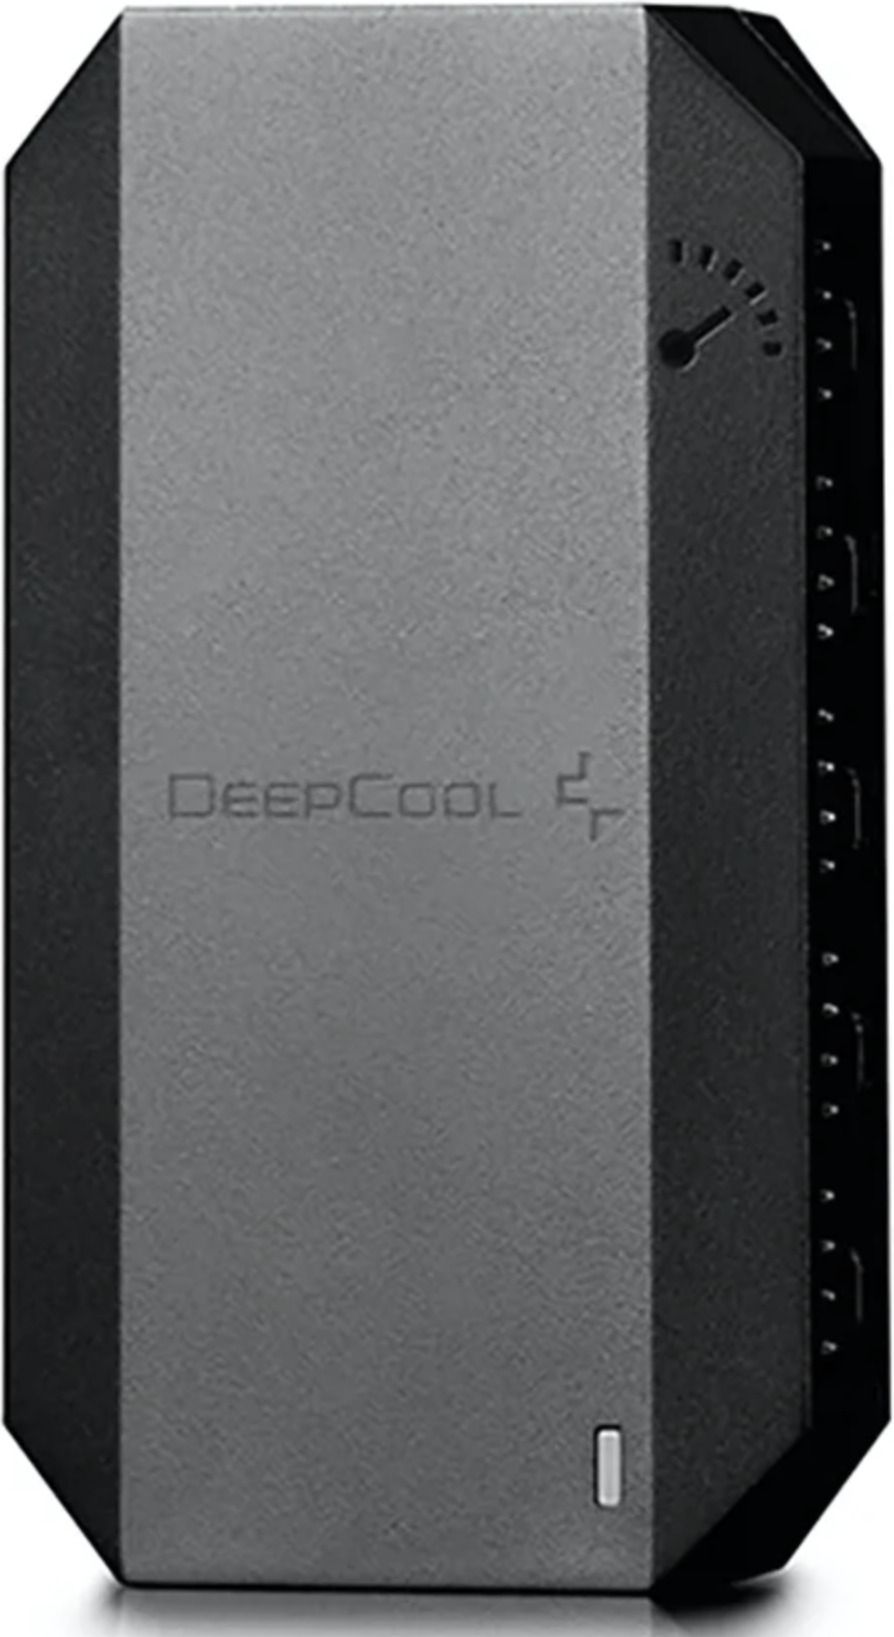 Deepcool - FH-10